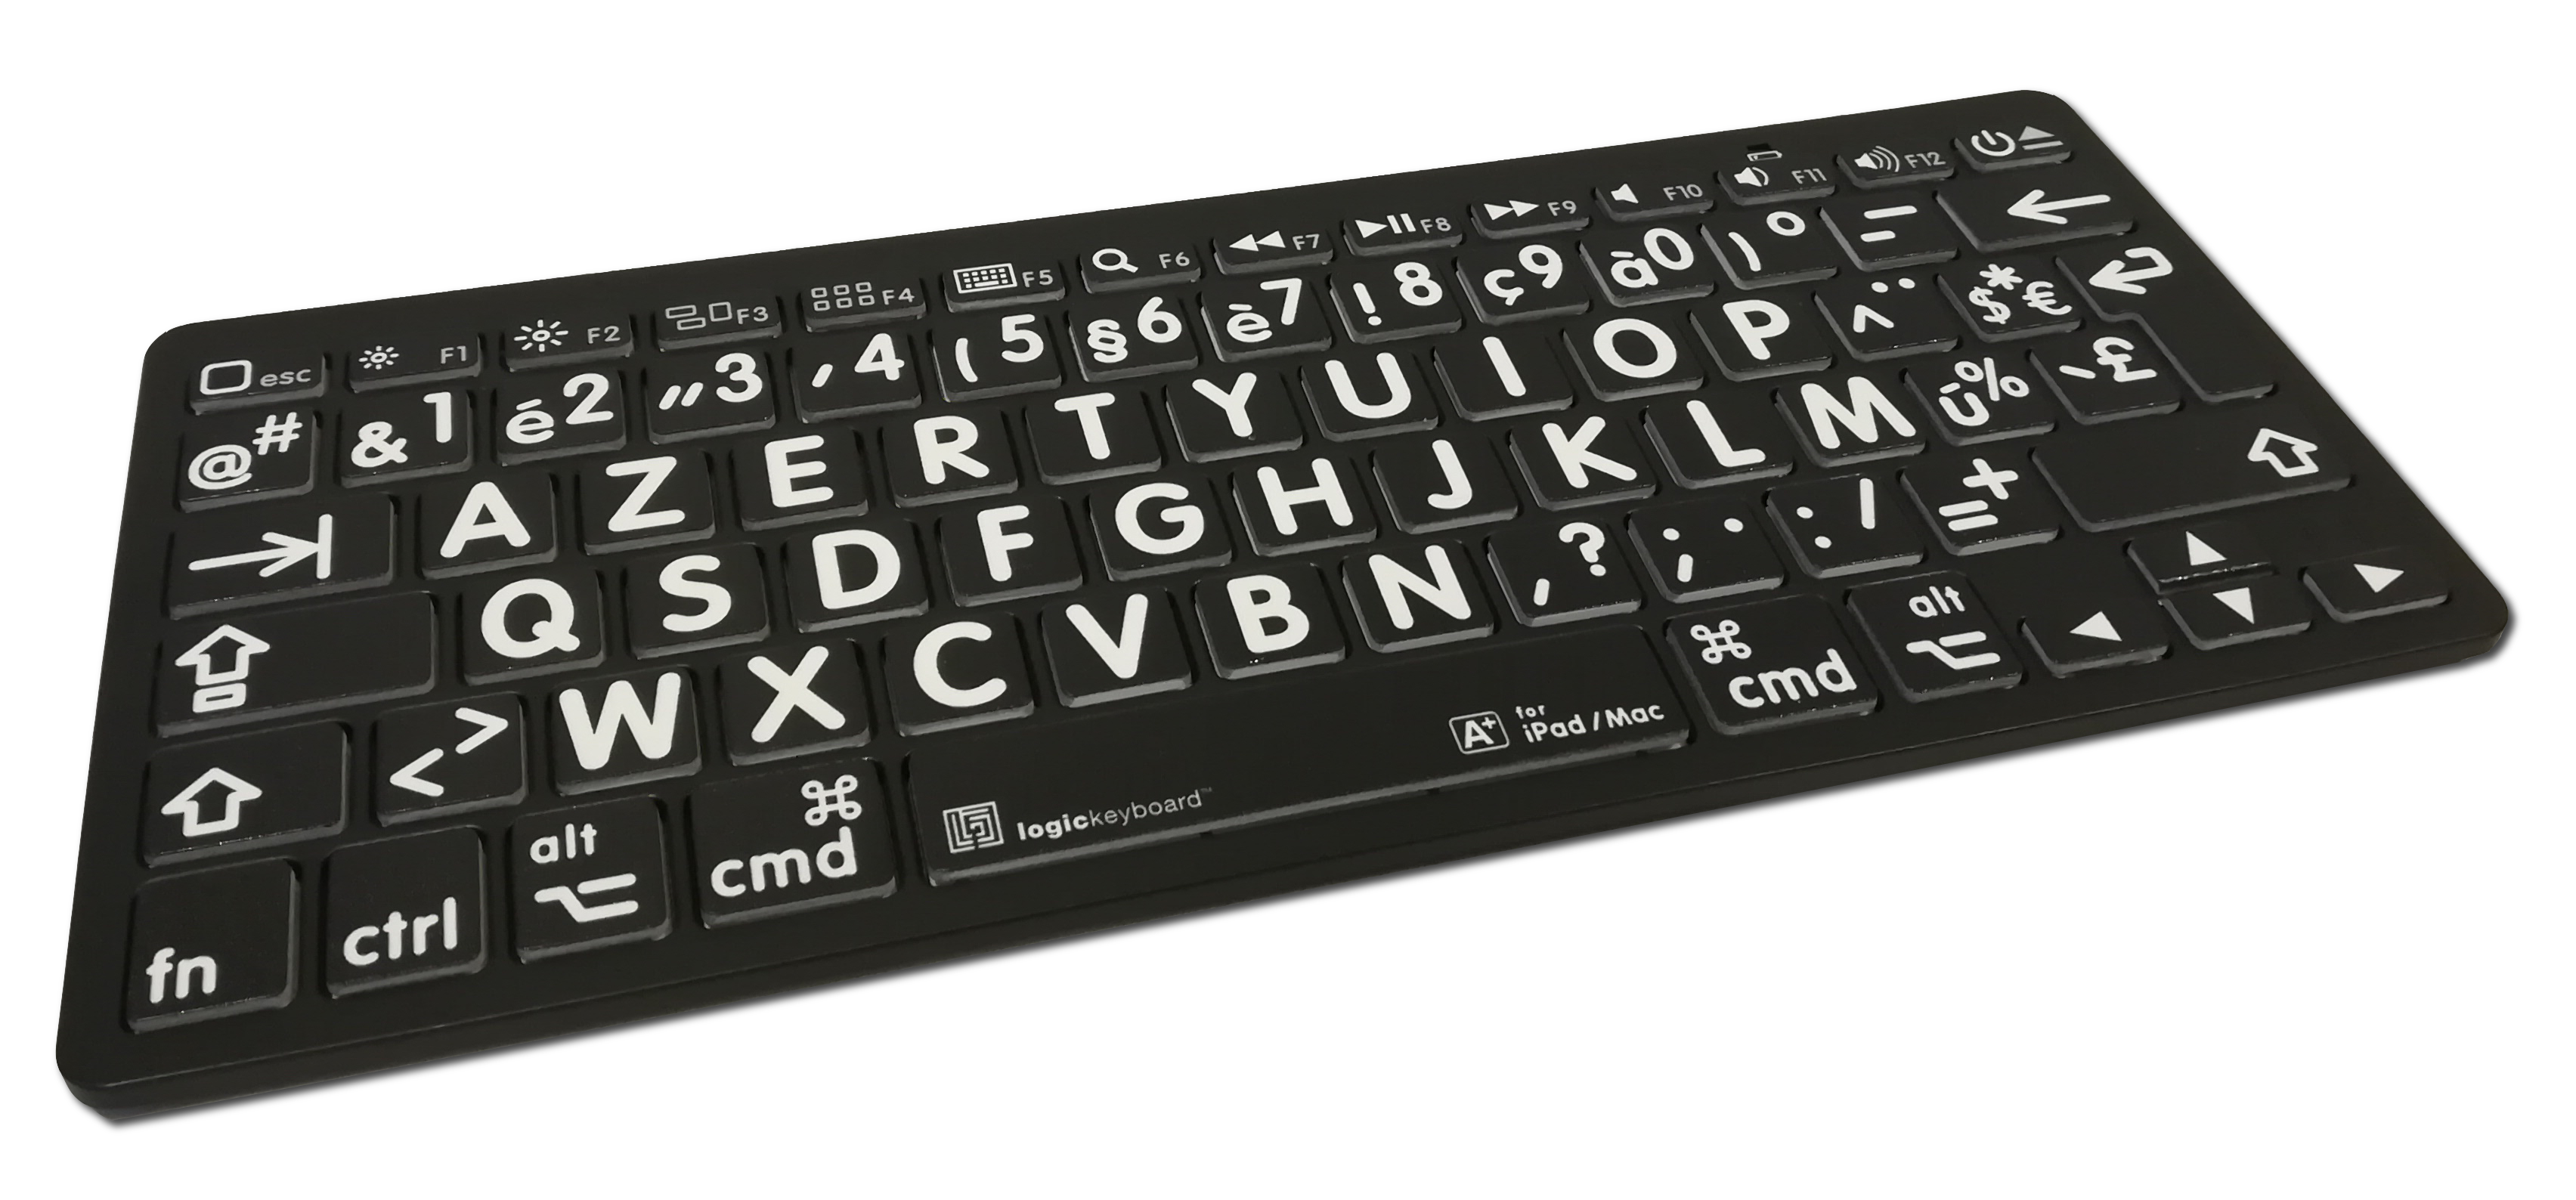 Flikkeren fusie regel XL Print bluetooth toetsenbord - zwarte toetsen met witte letters